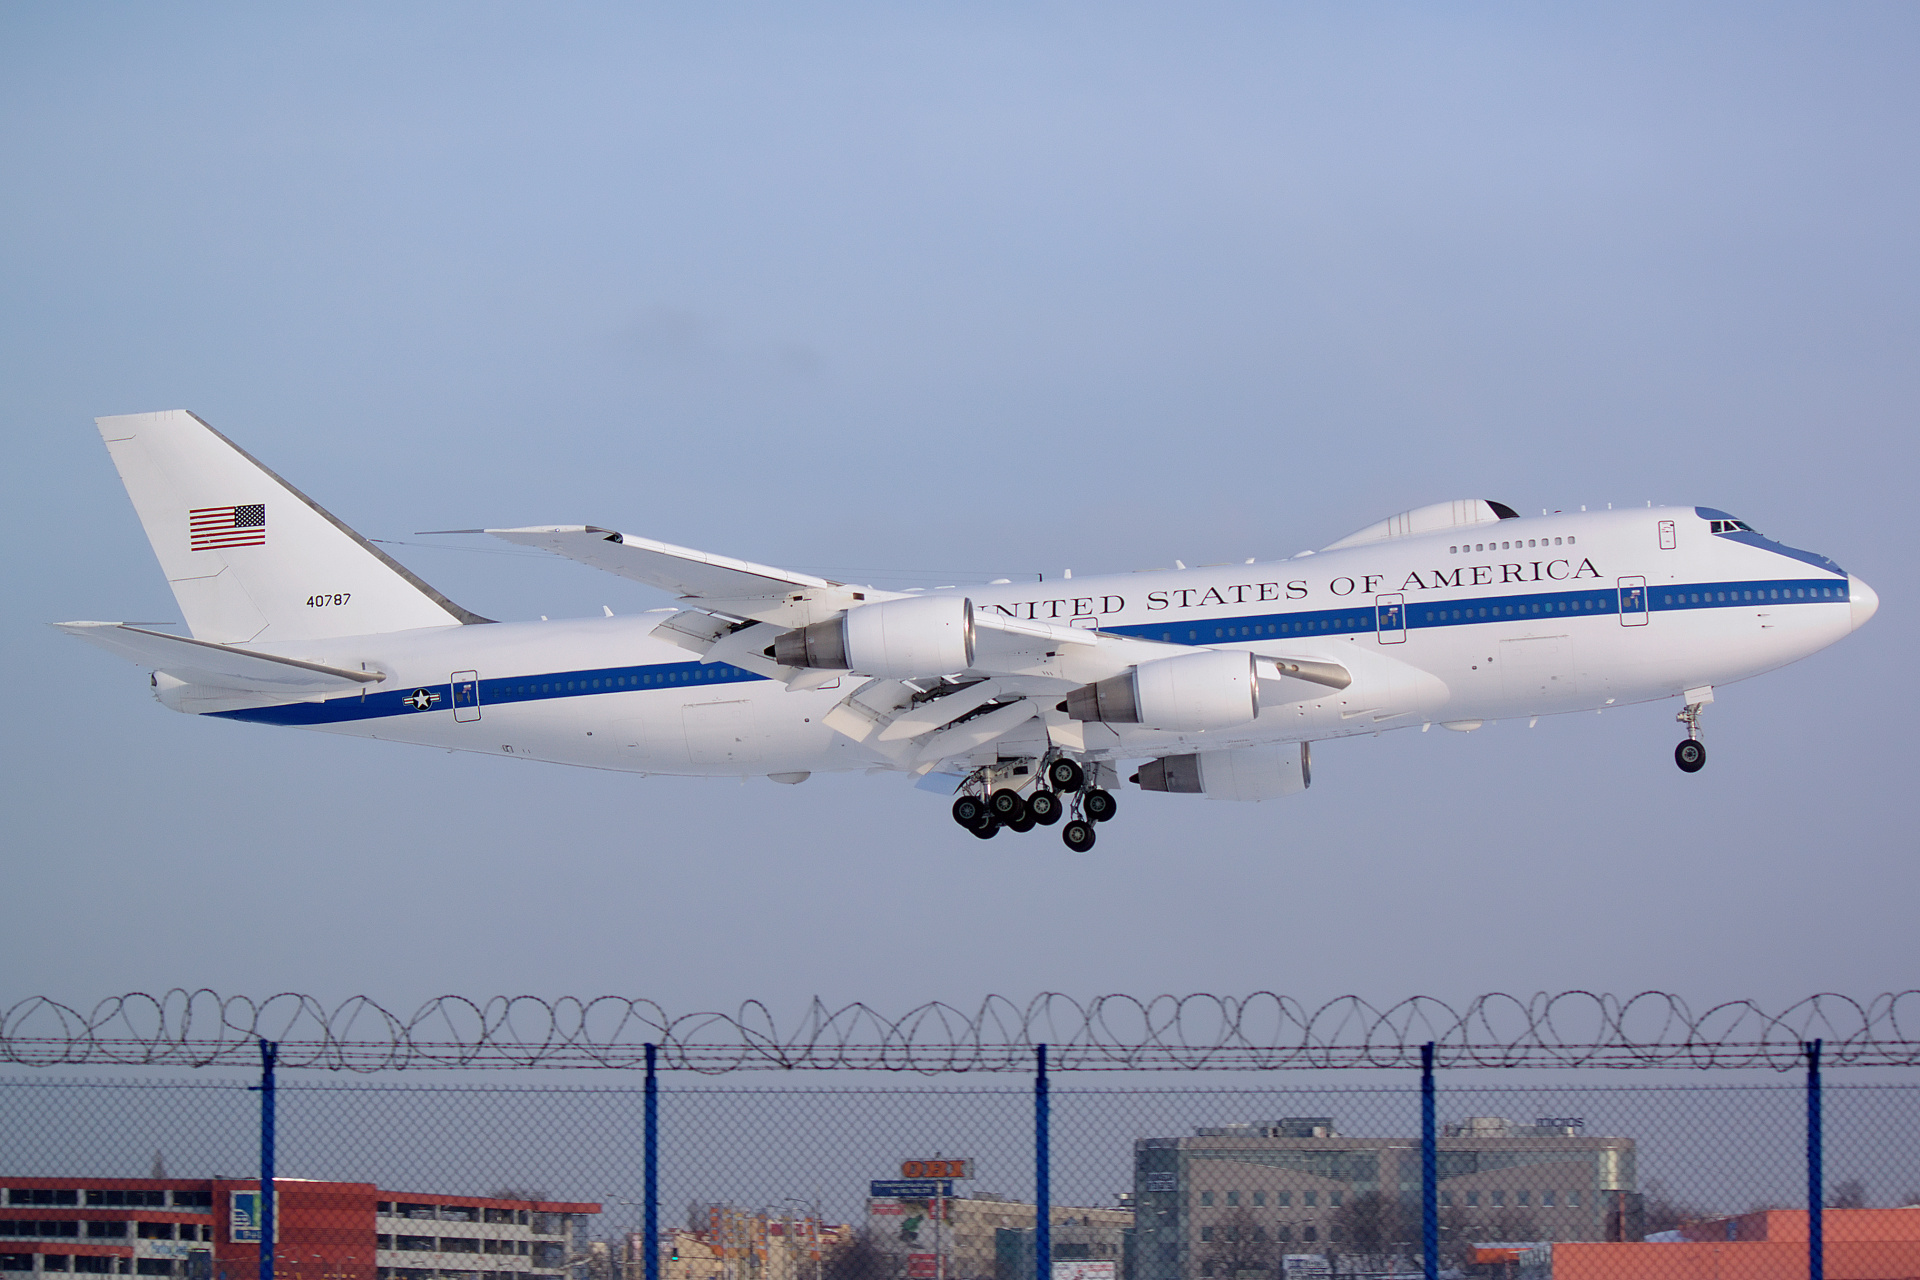 74-0787, U.S. Air Force (Aircraft » EPWA Spotting » Boeing 747-200 » E-4B)